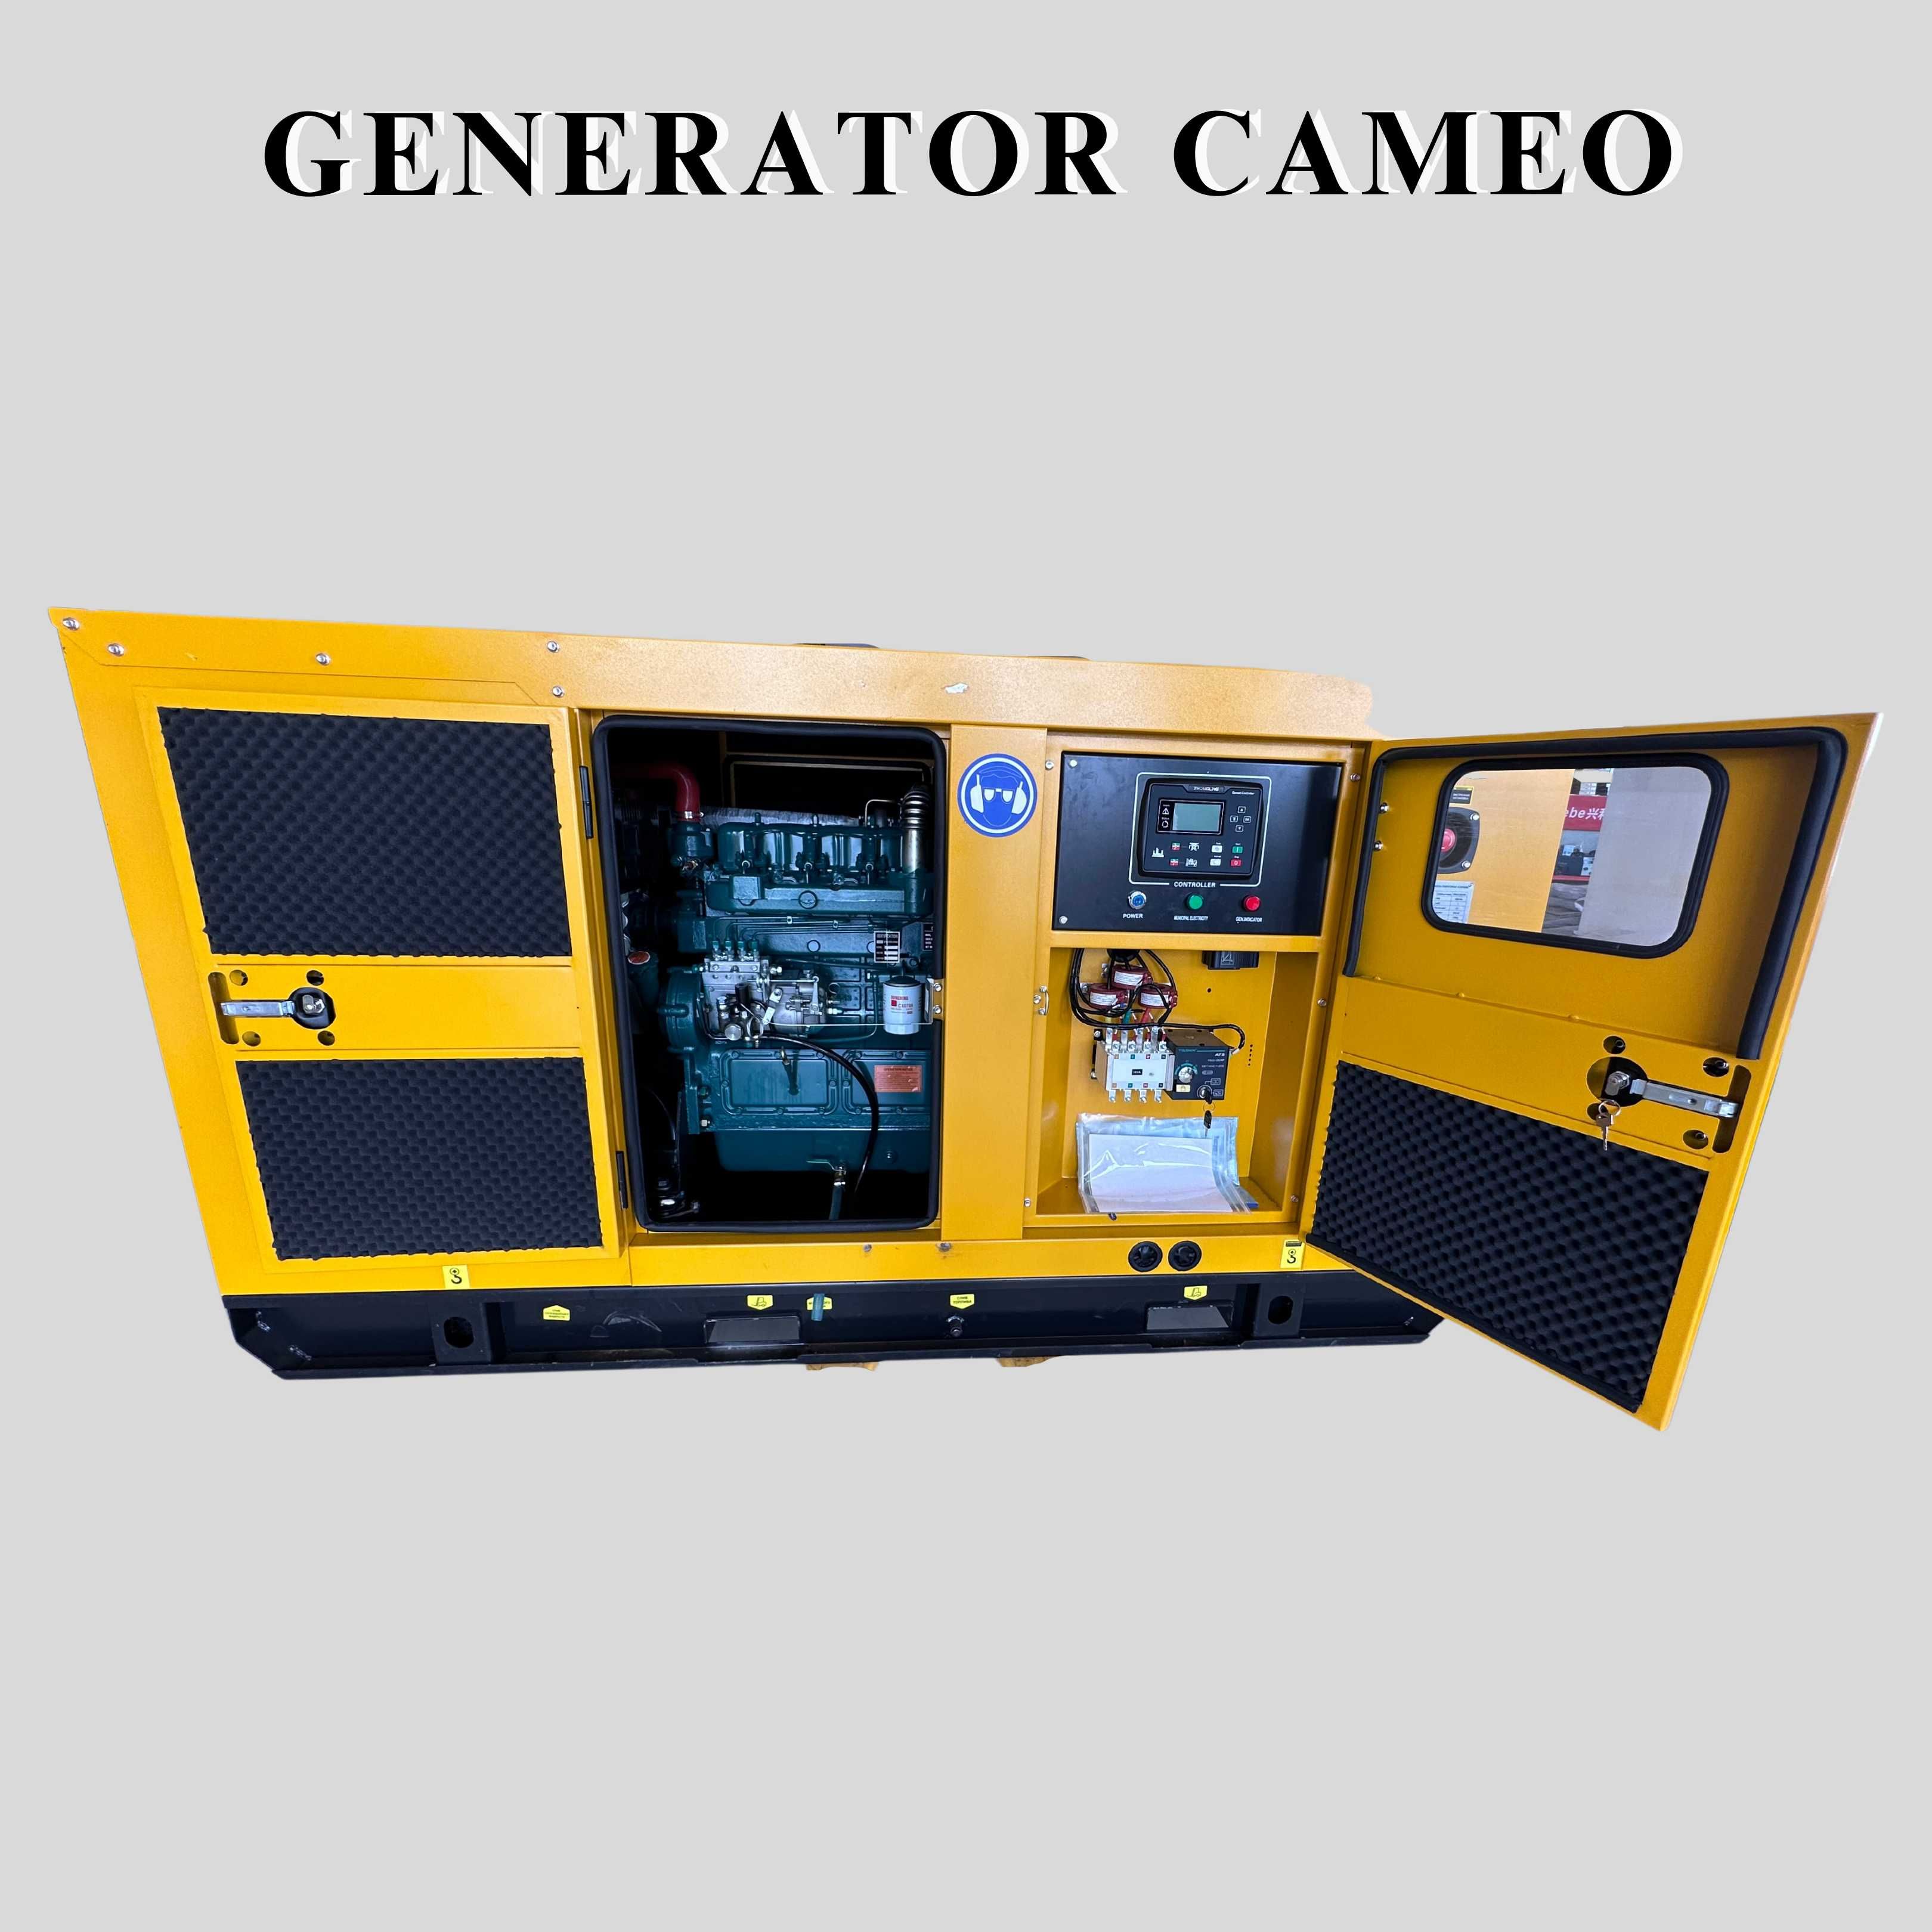 Дизельный Генераторлар дизельный генератор, dvijok Generatorlar  30Kw